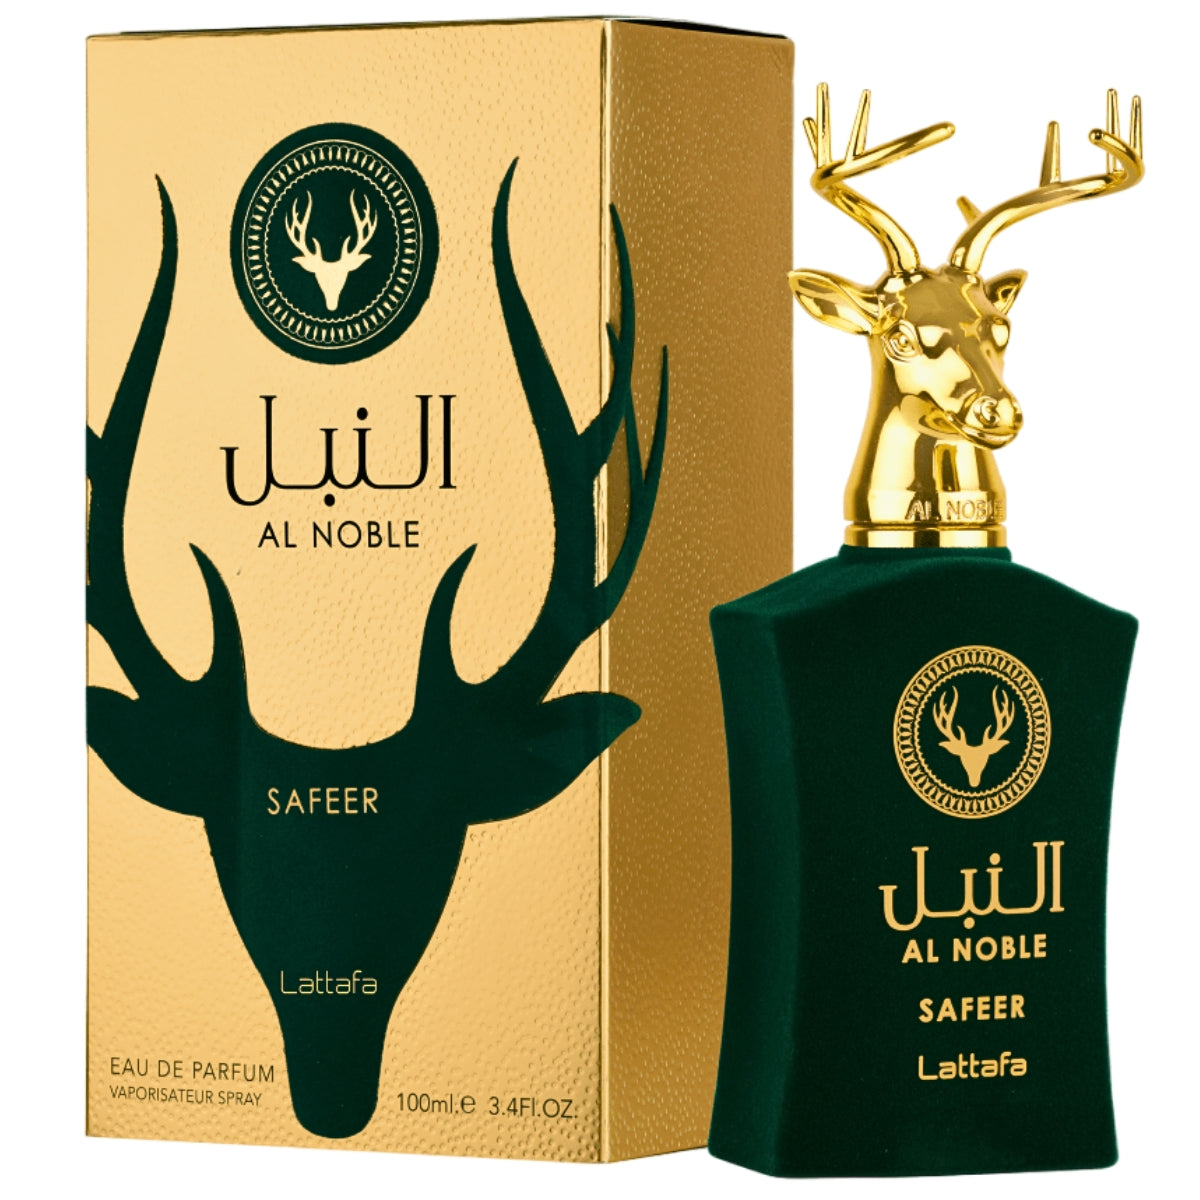 Lattafa Perfume Al Noble Safeer Eau de Parfum 100ml